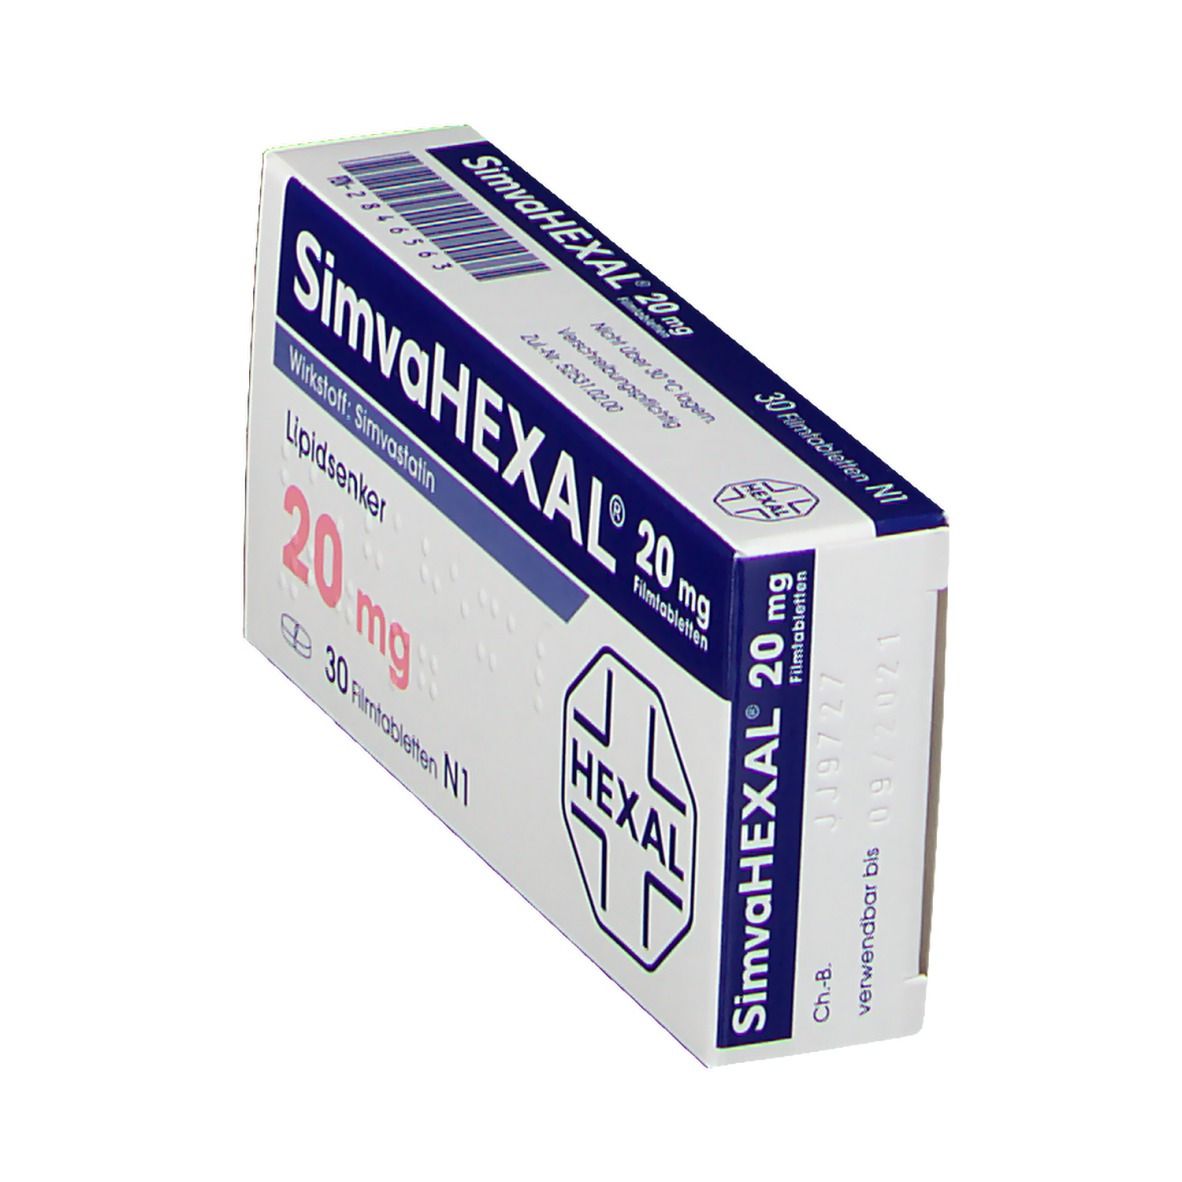 SimvaHEXAL® 20 mg